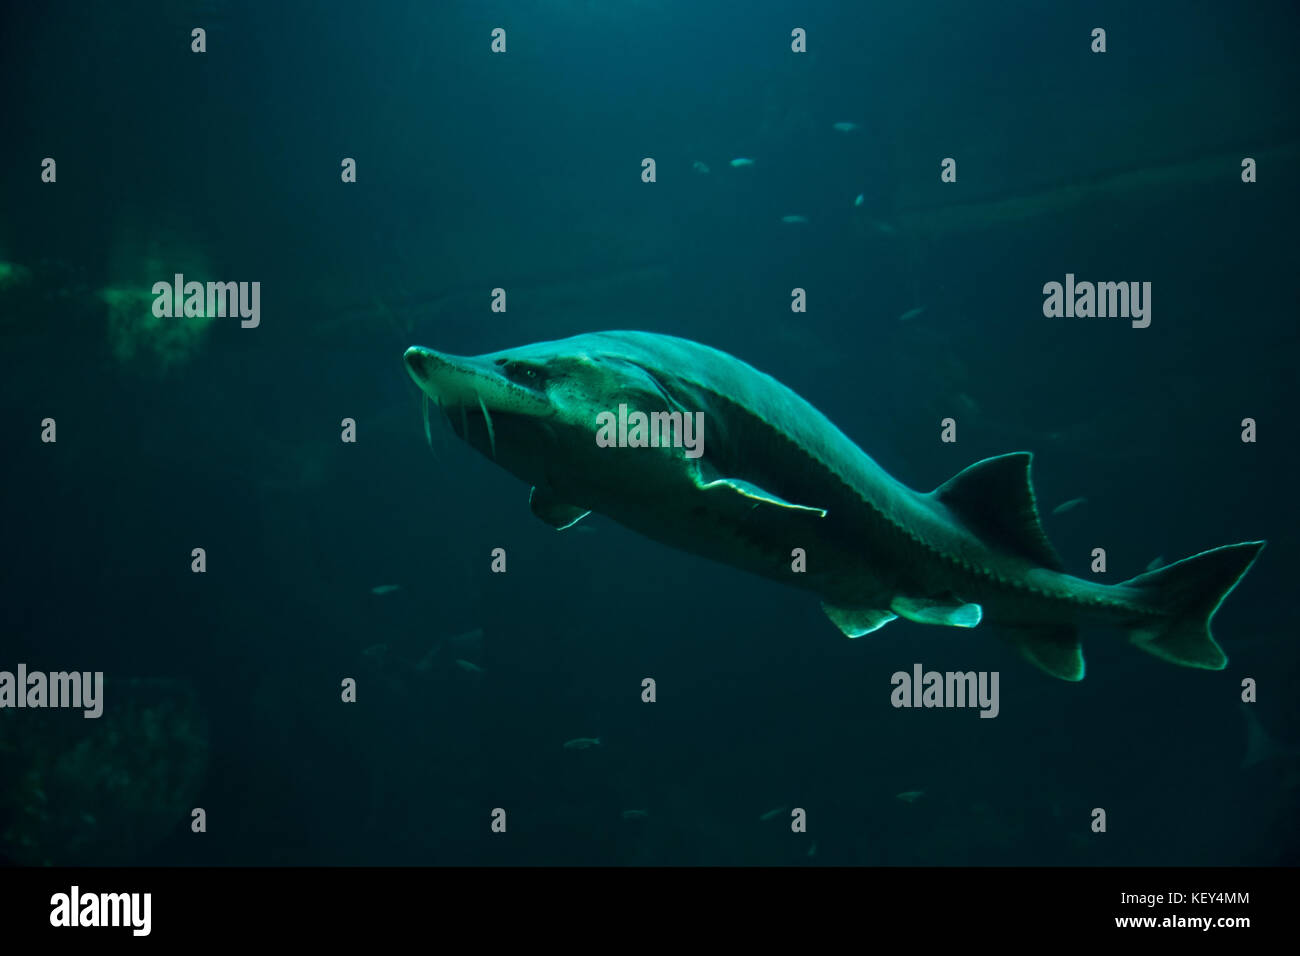 Large sturgeon fish swimming in Lake Tisza Ecocentre aquarium Stock Photo